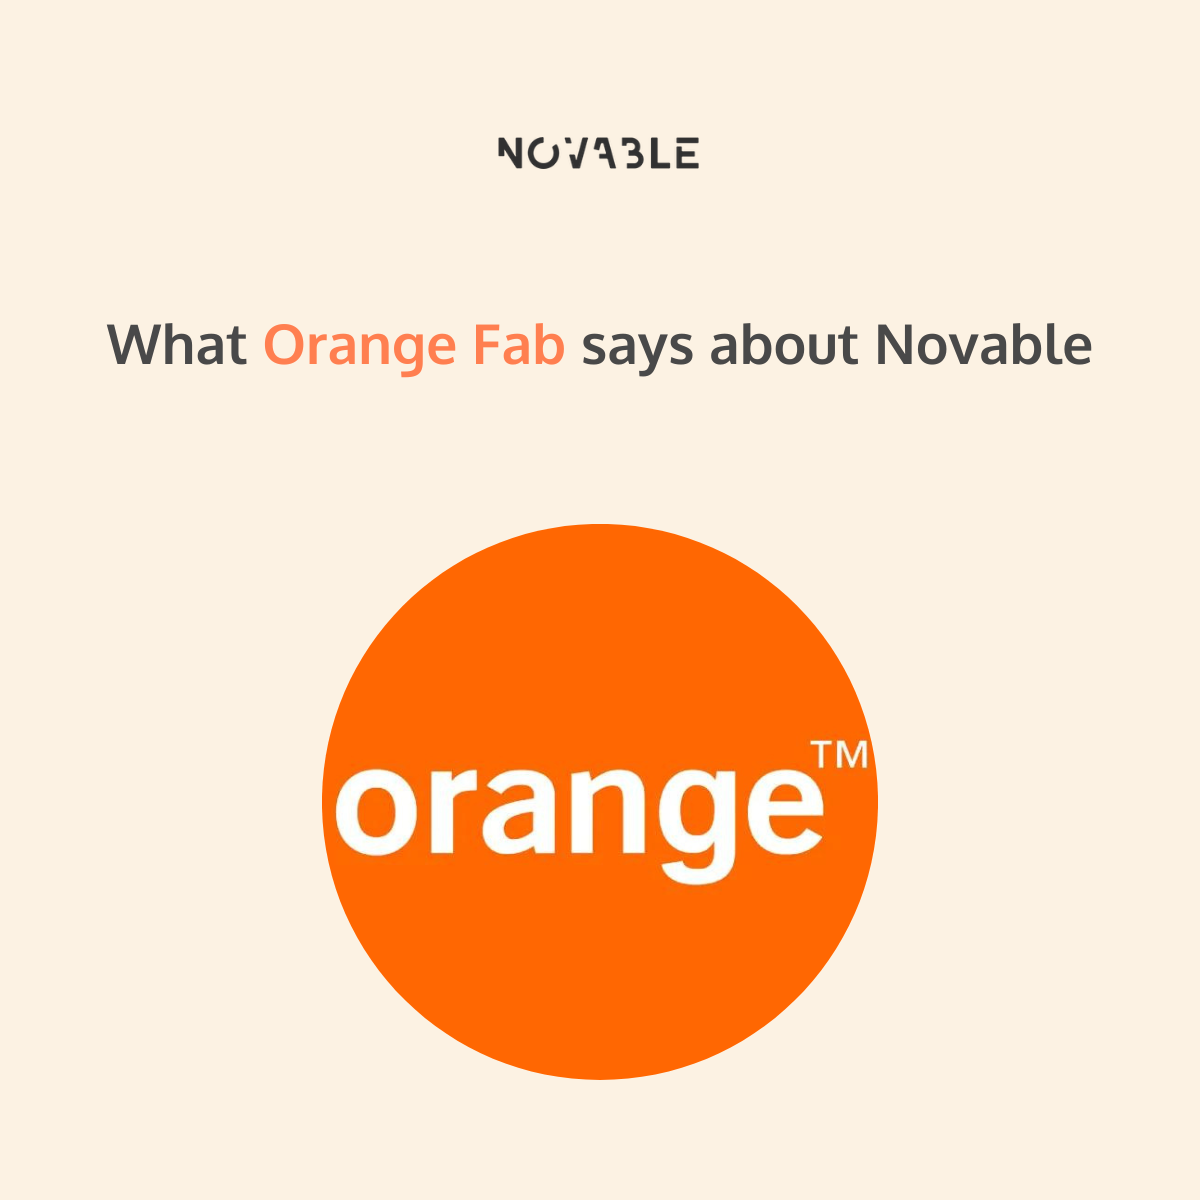 Orange Fab for corporate innovation